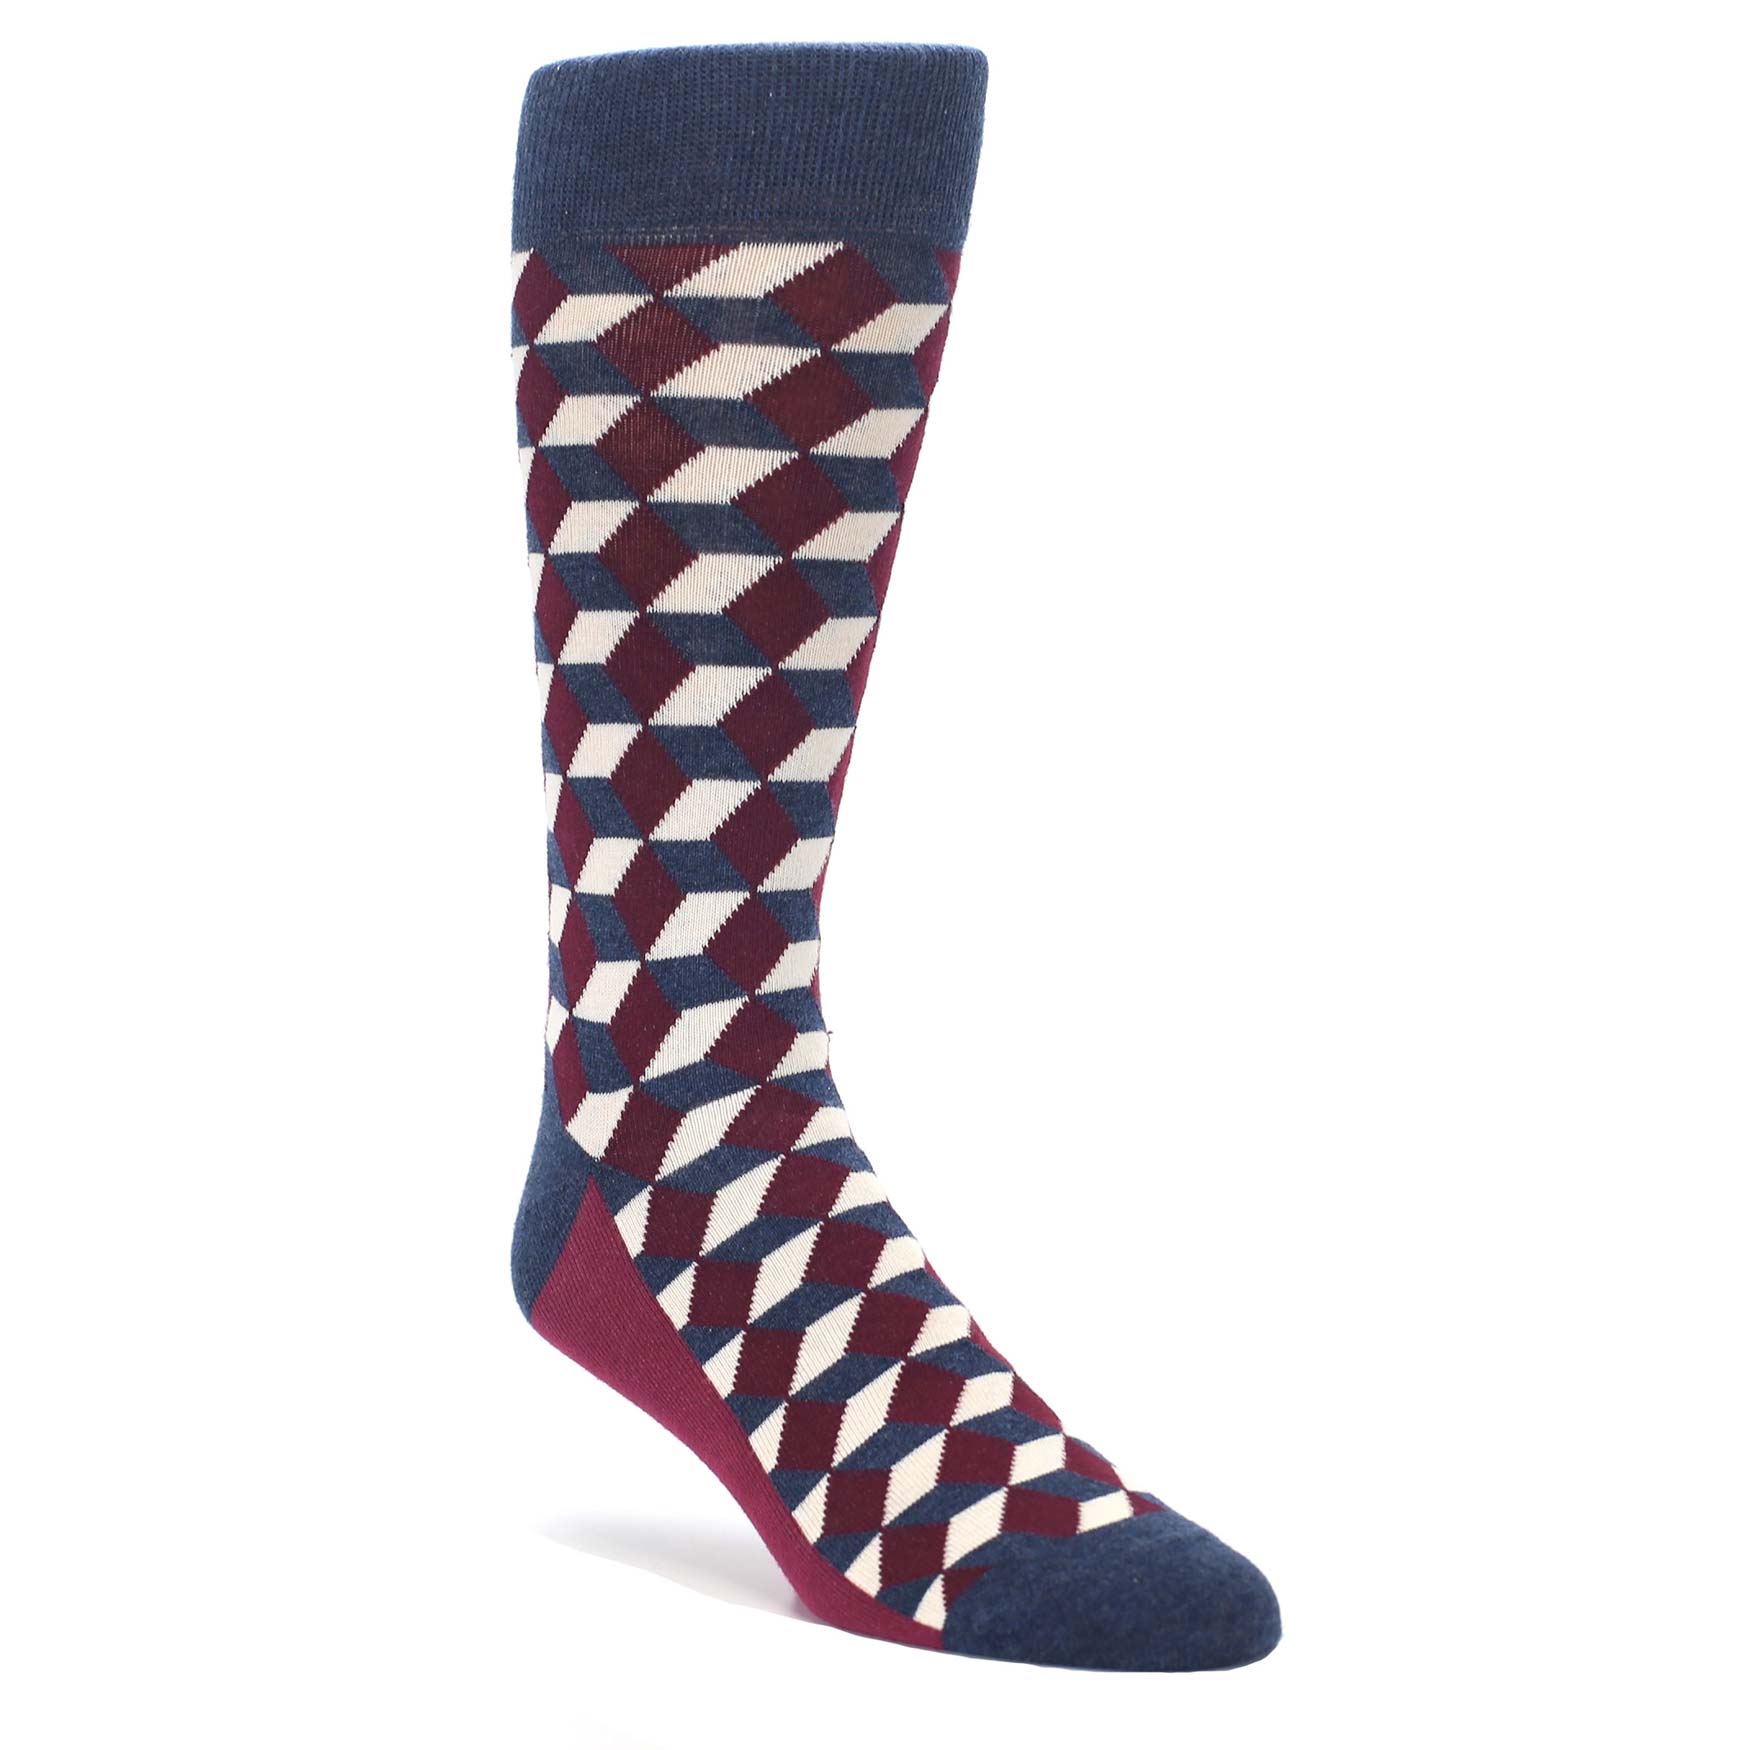 Statement Sockwear Beeline Optical Men's Dress Socks in Burgundy and Navy